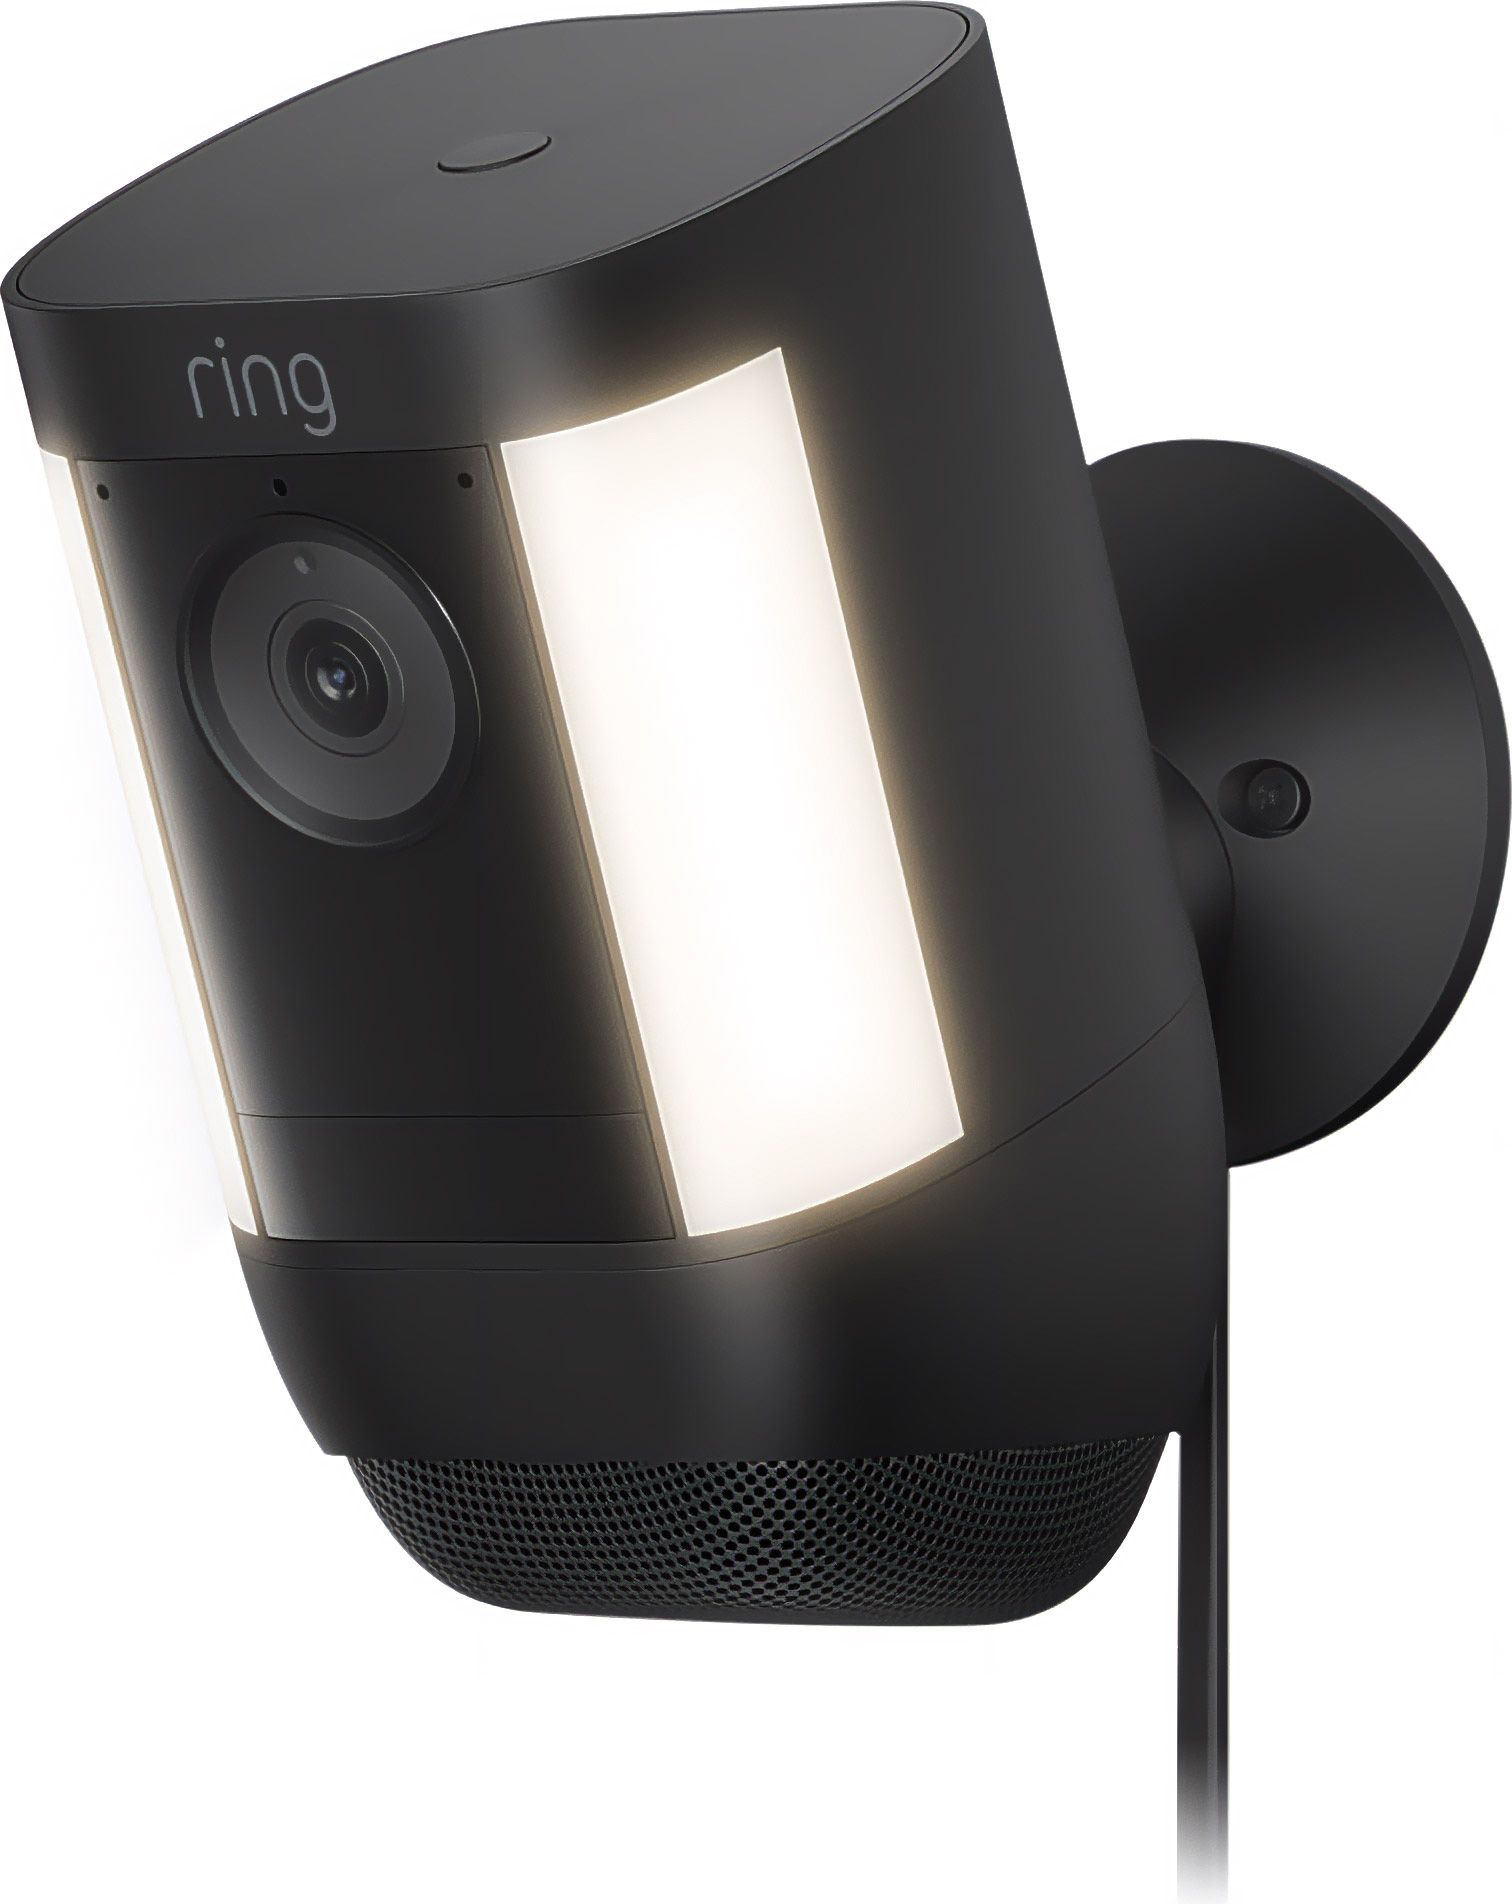 Ring Plug-In Spotlight Cam Pro Full HD 1080p Smart Home Security Camera - Black, Black